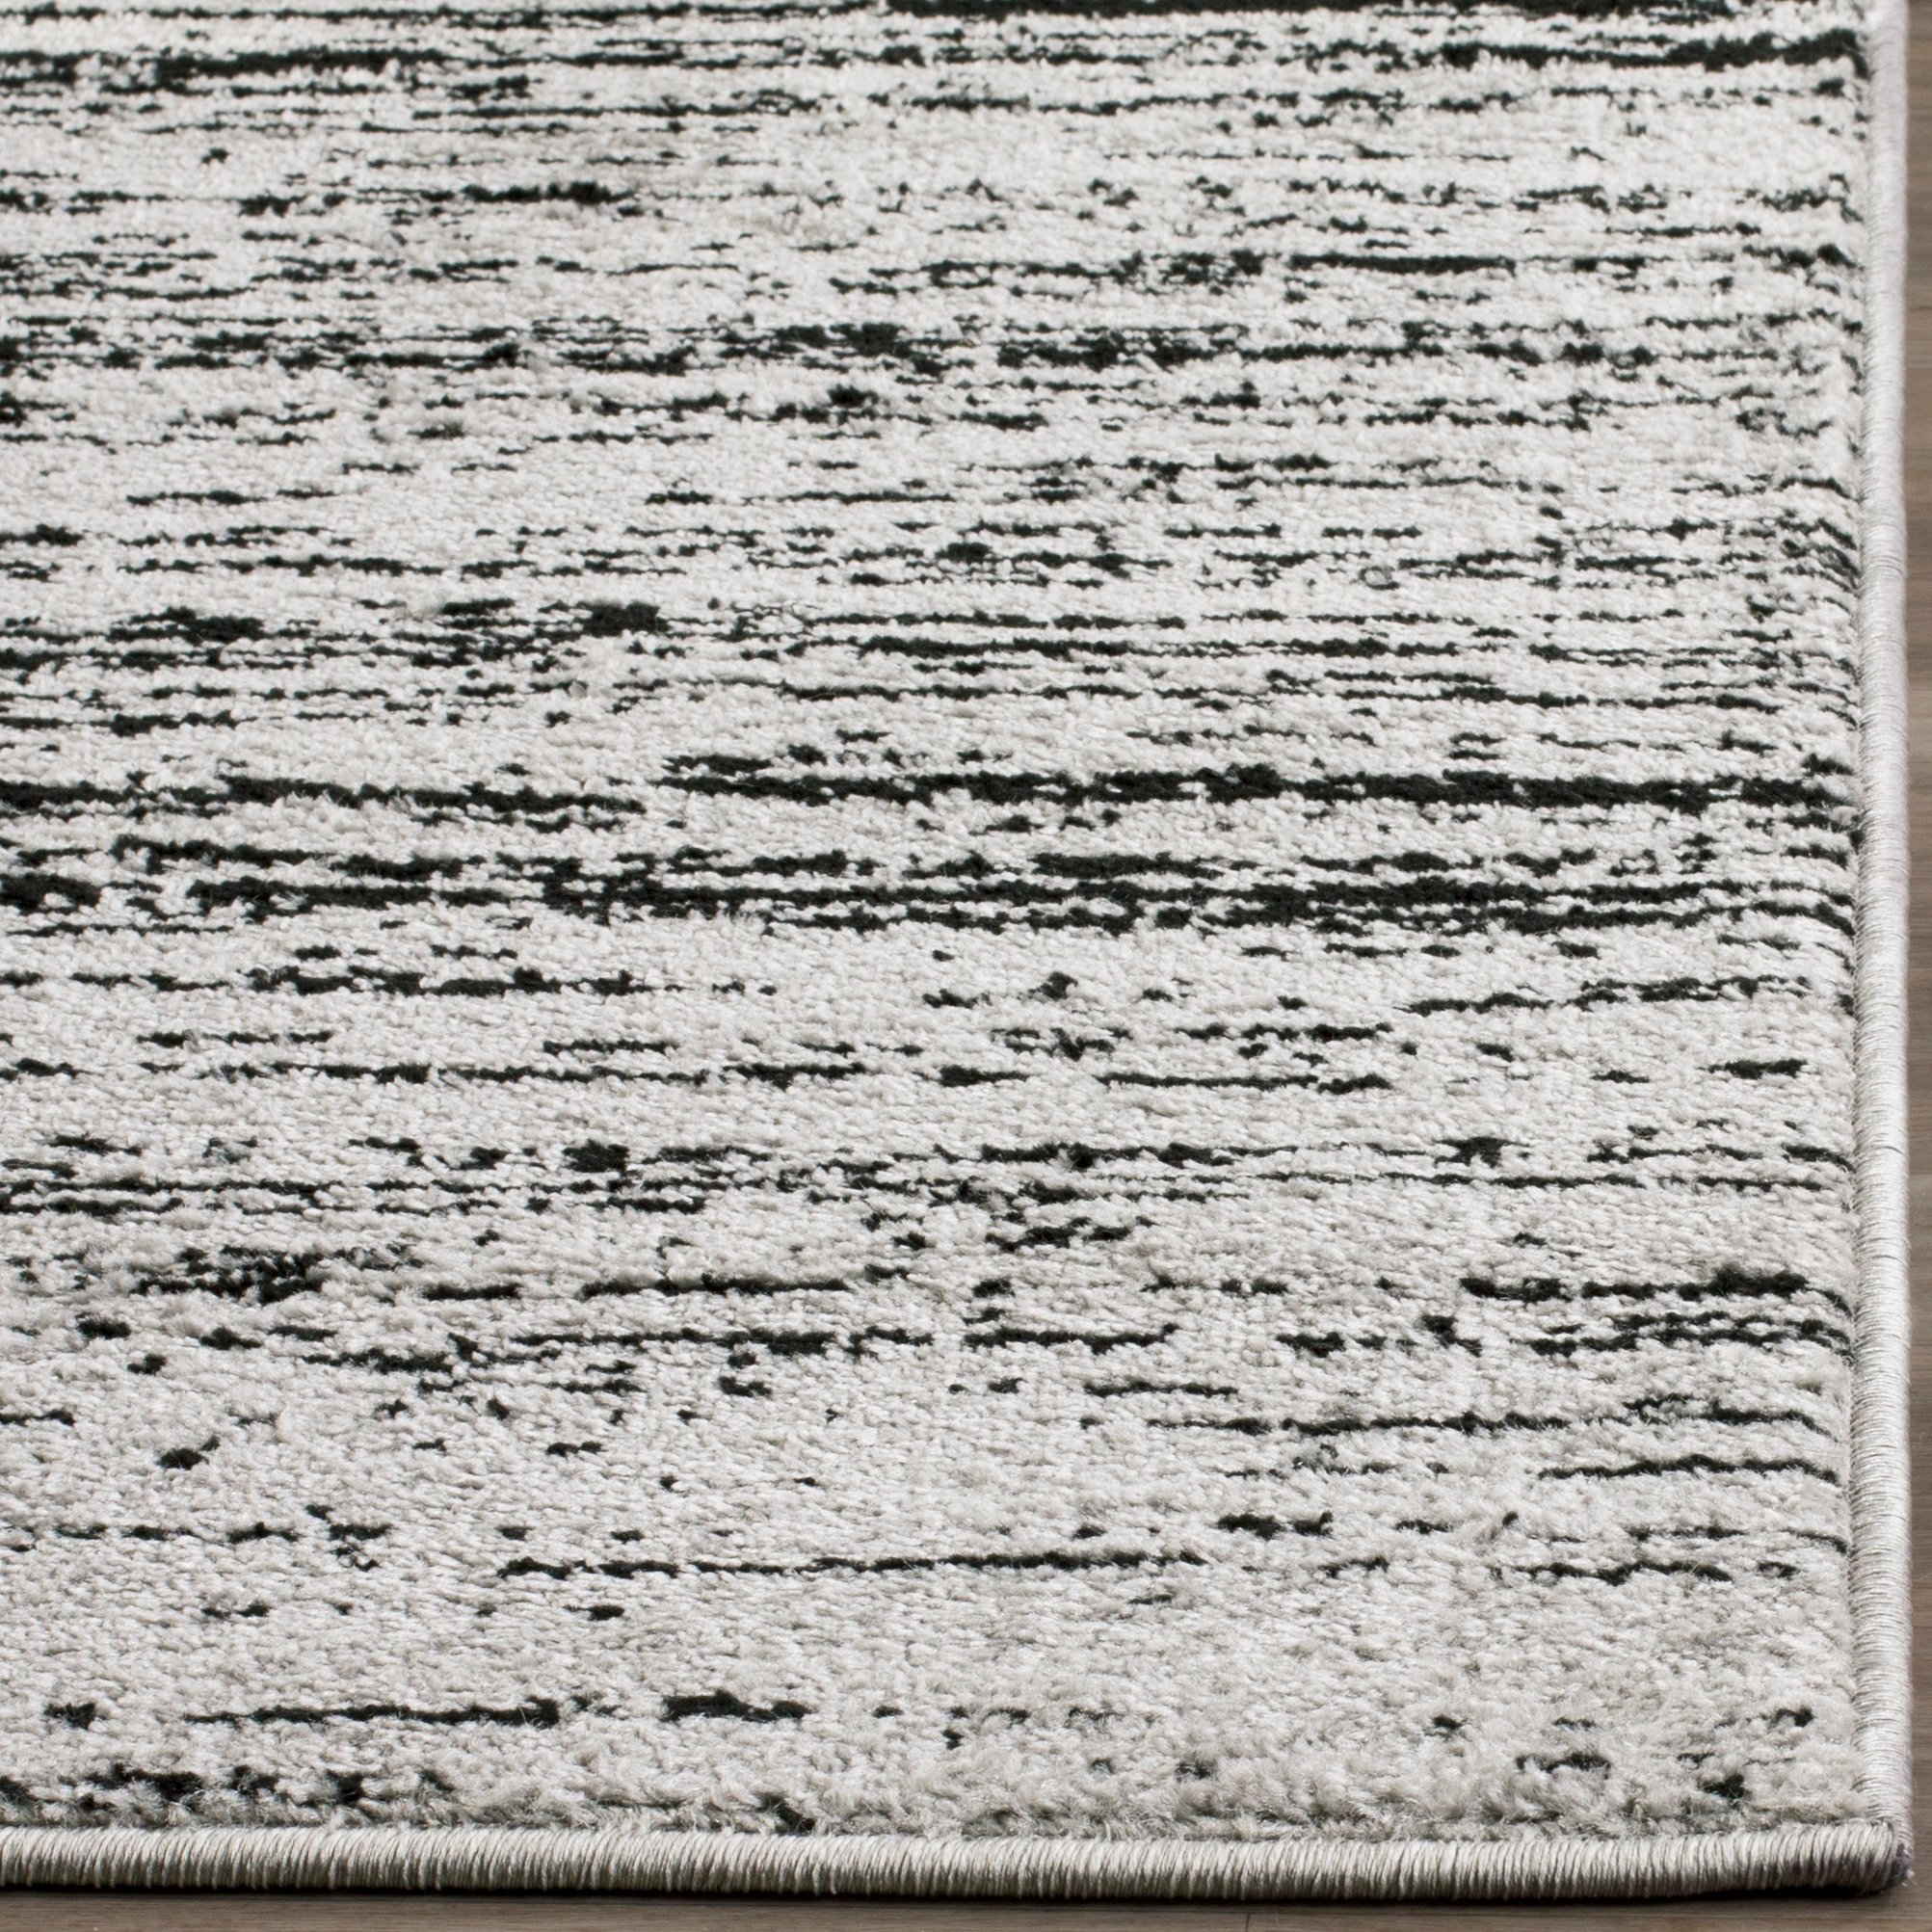 Arlo Home Woven Area Rug, ADR113A, Silver/Black,  8' X 10' - Image 2